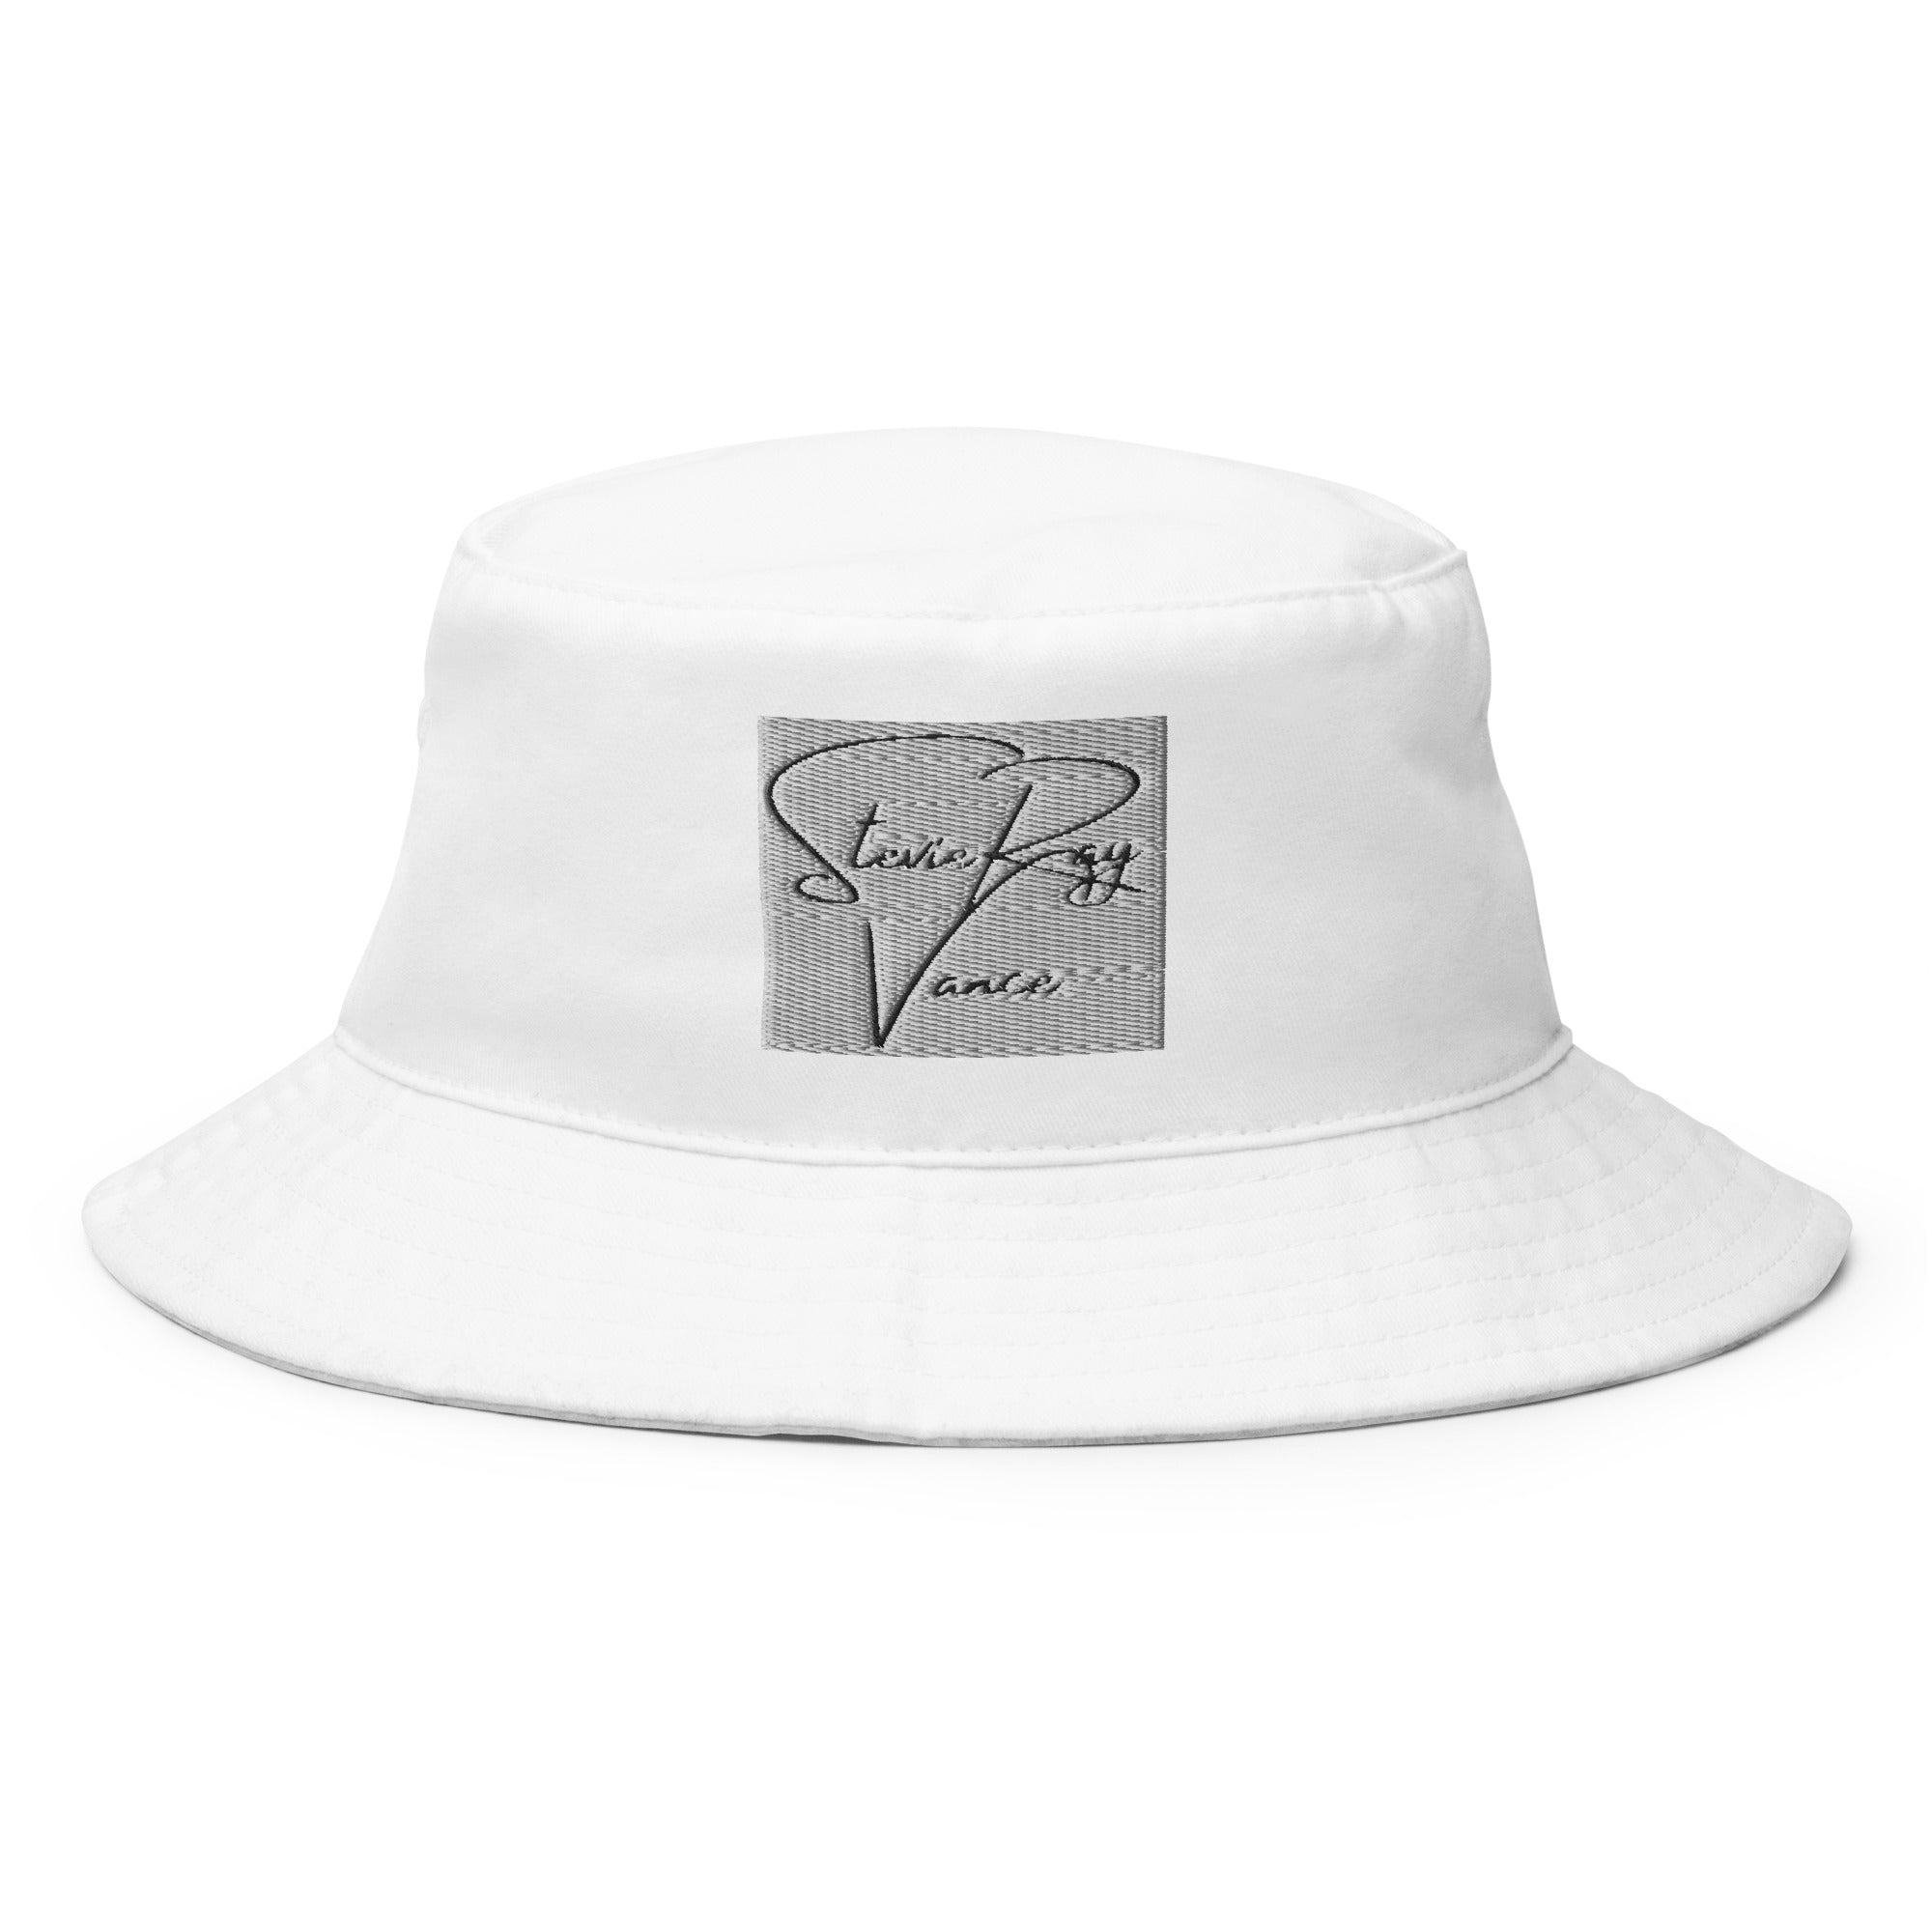 MISBHV Monogram Bucket Hat